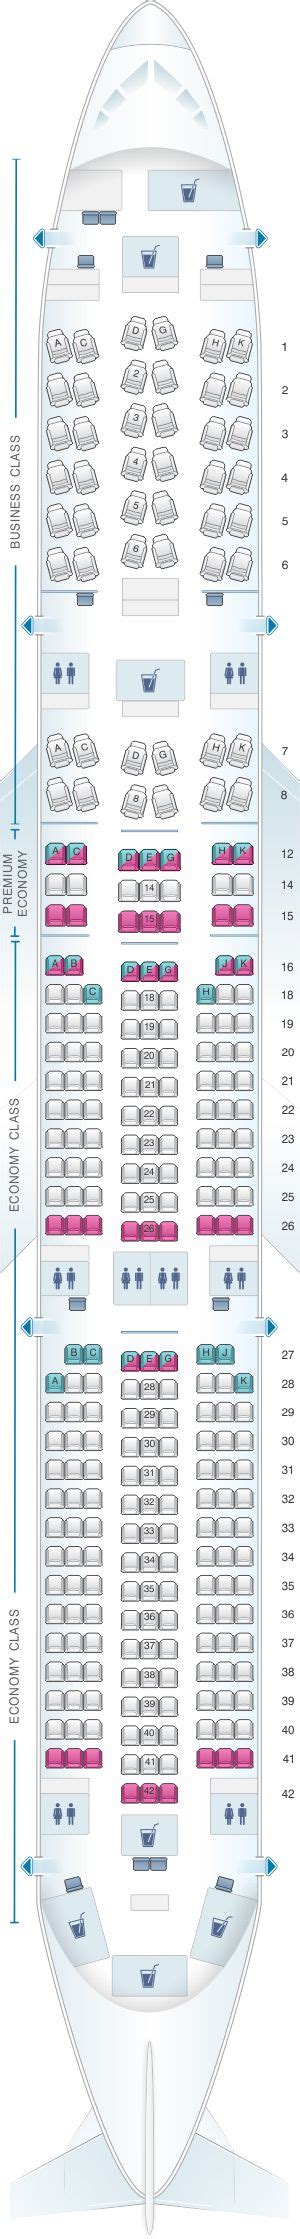 Lufthansa A350 Seat Map